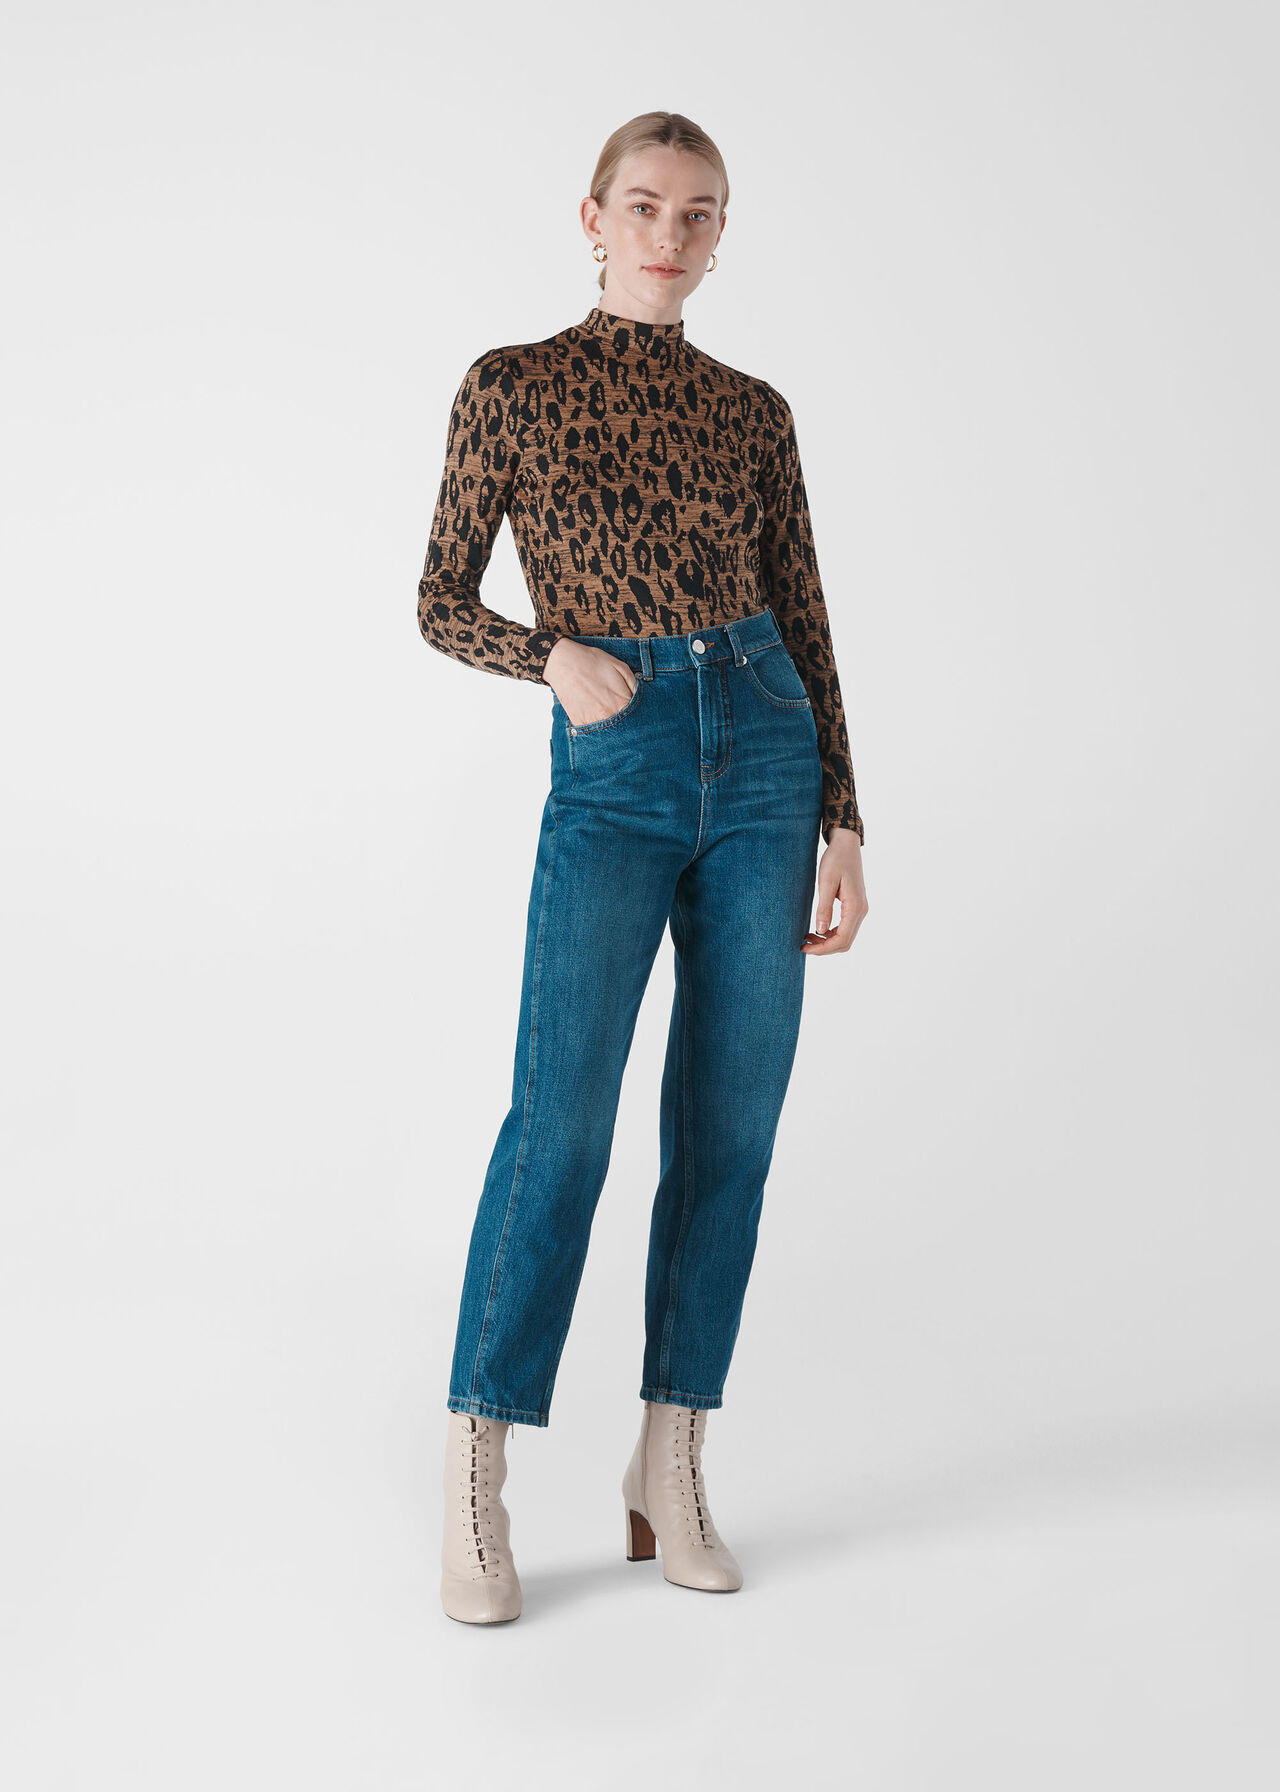 Leopard Print High Neck Animal Jaquard Top | WHISTLES | Whistles UK